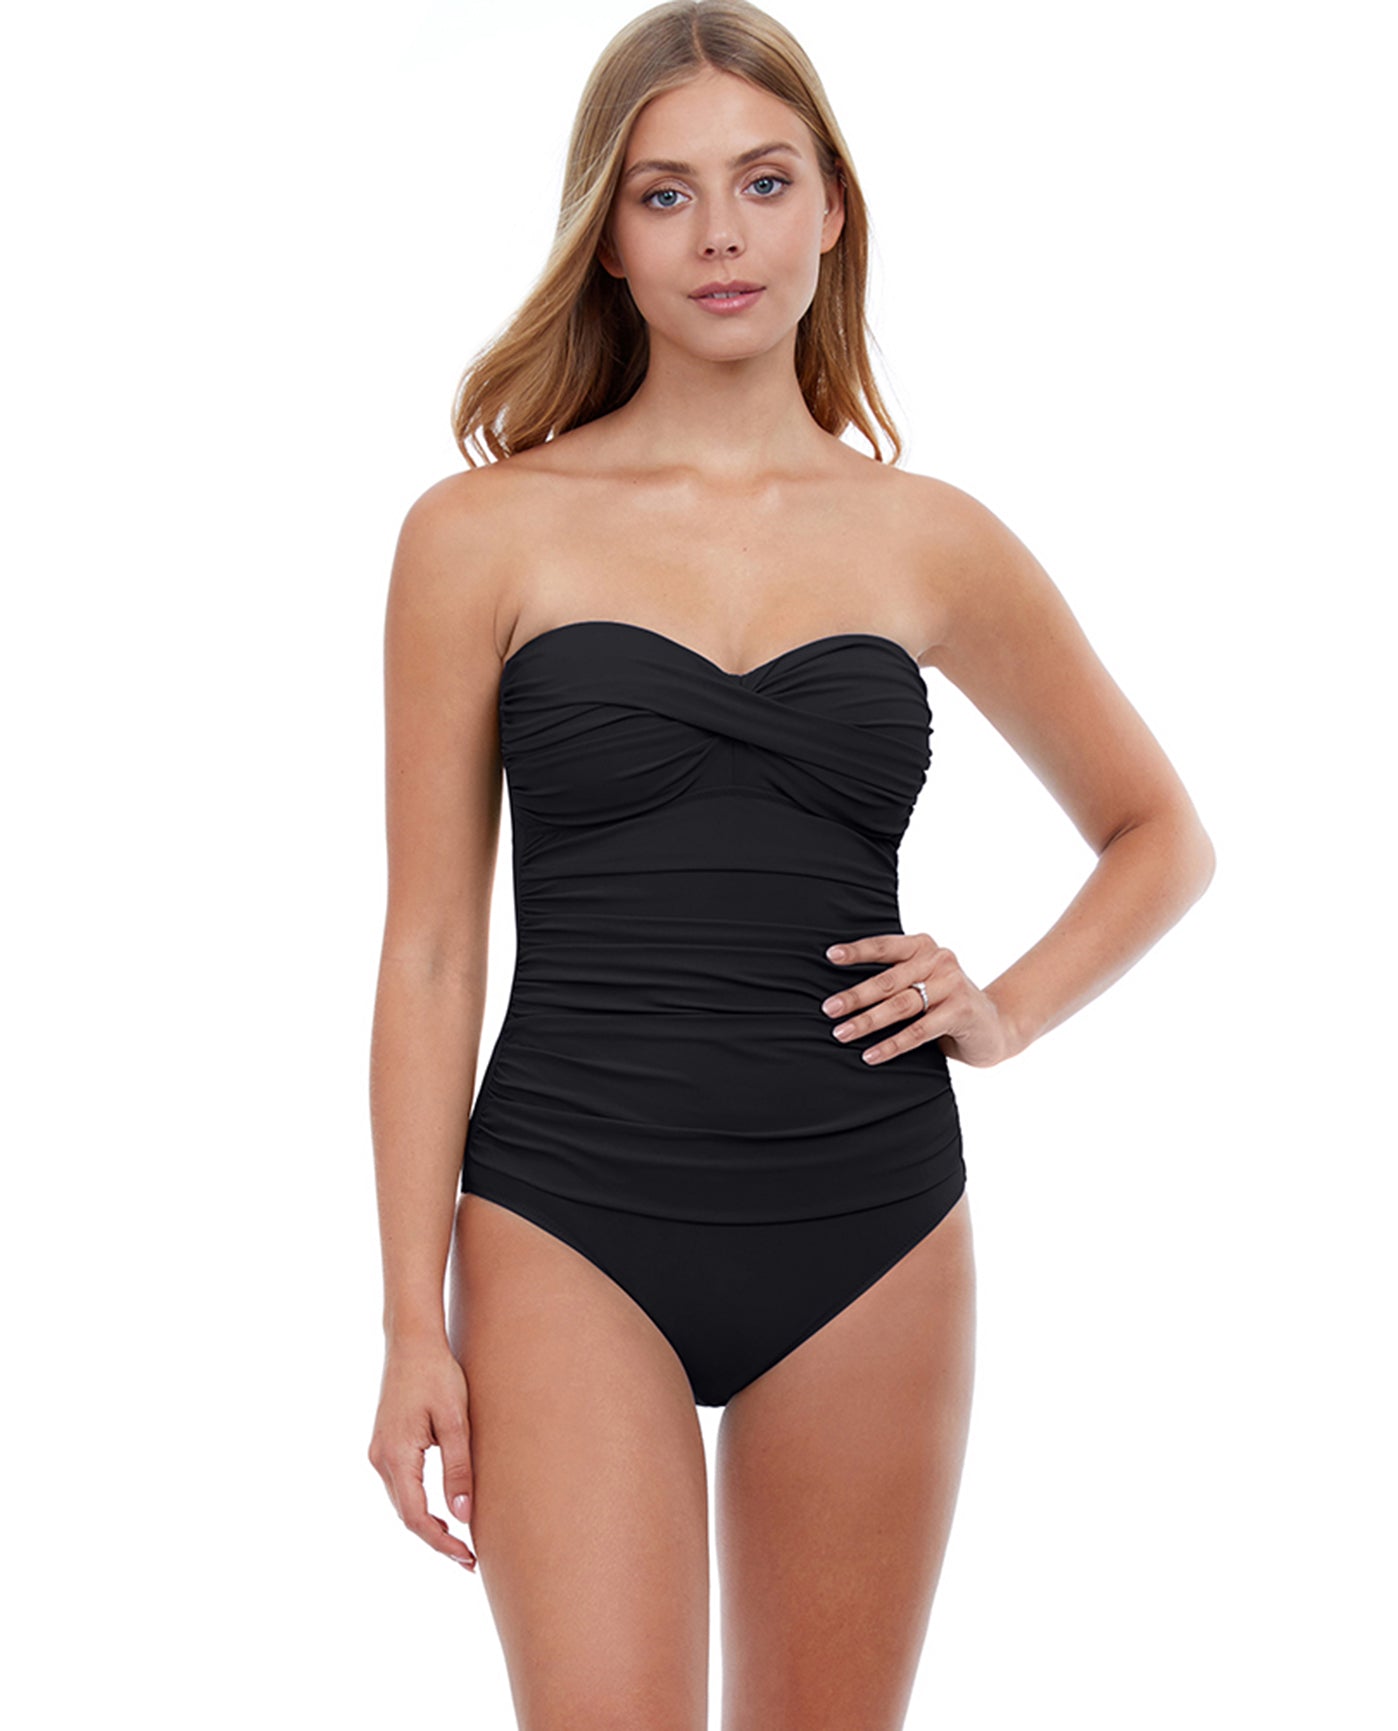 Gottex Women's Bandeau One Piece Swimsuit (10-Medium) Black/White